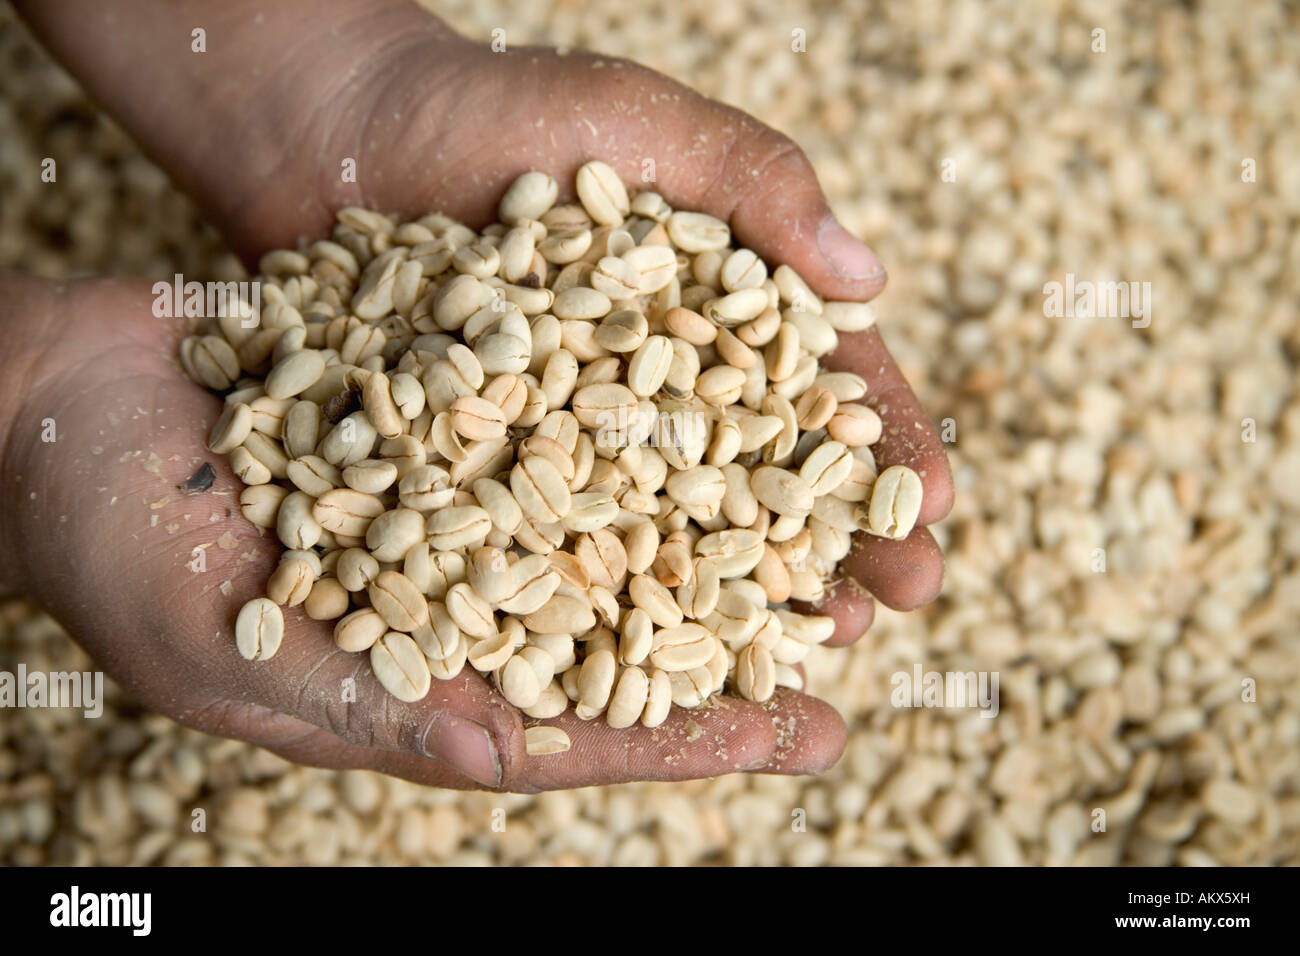 Hands displaying dried Kona coffee beans. Stock Photo